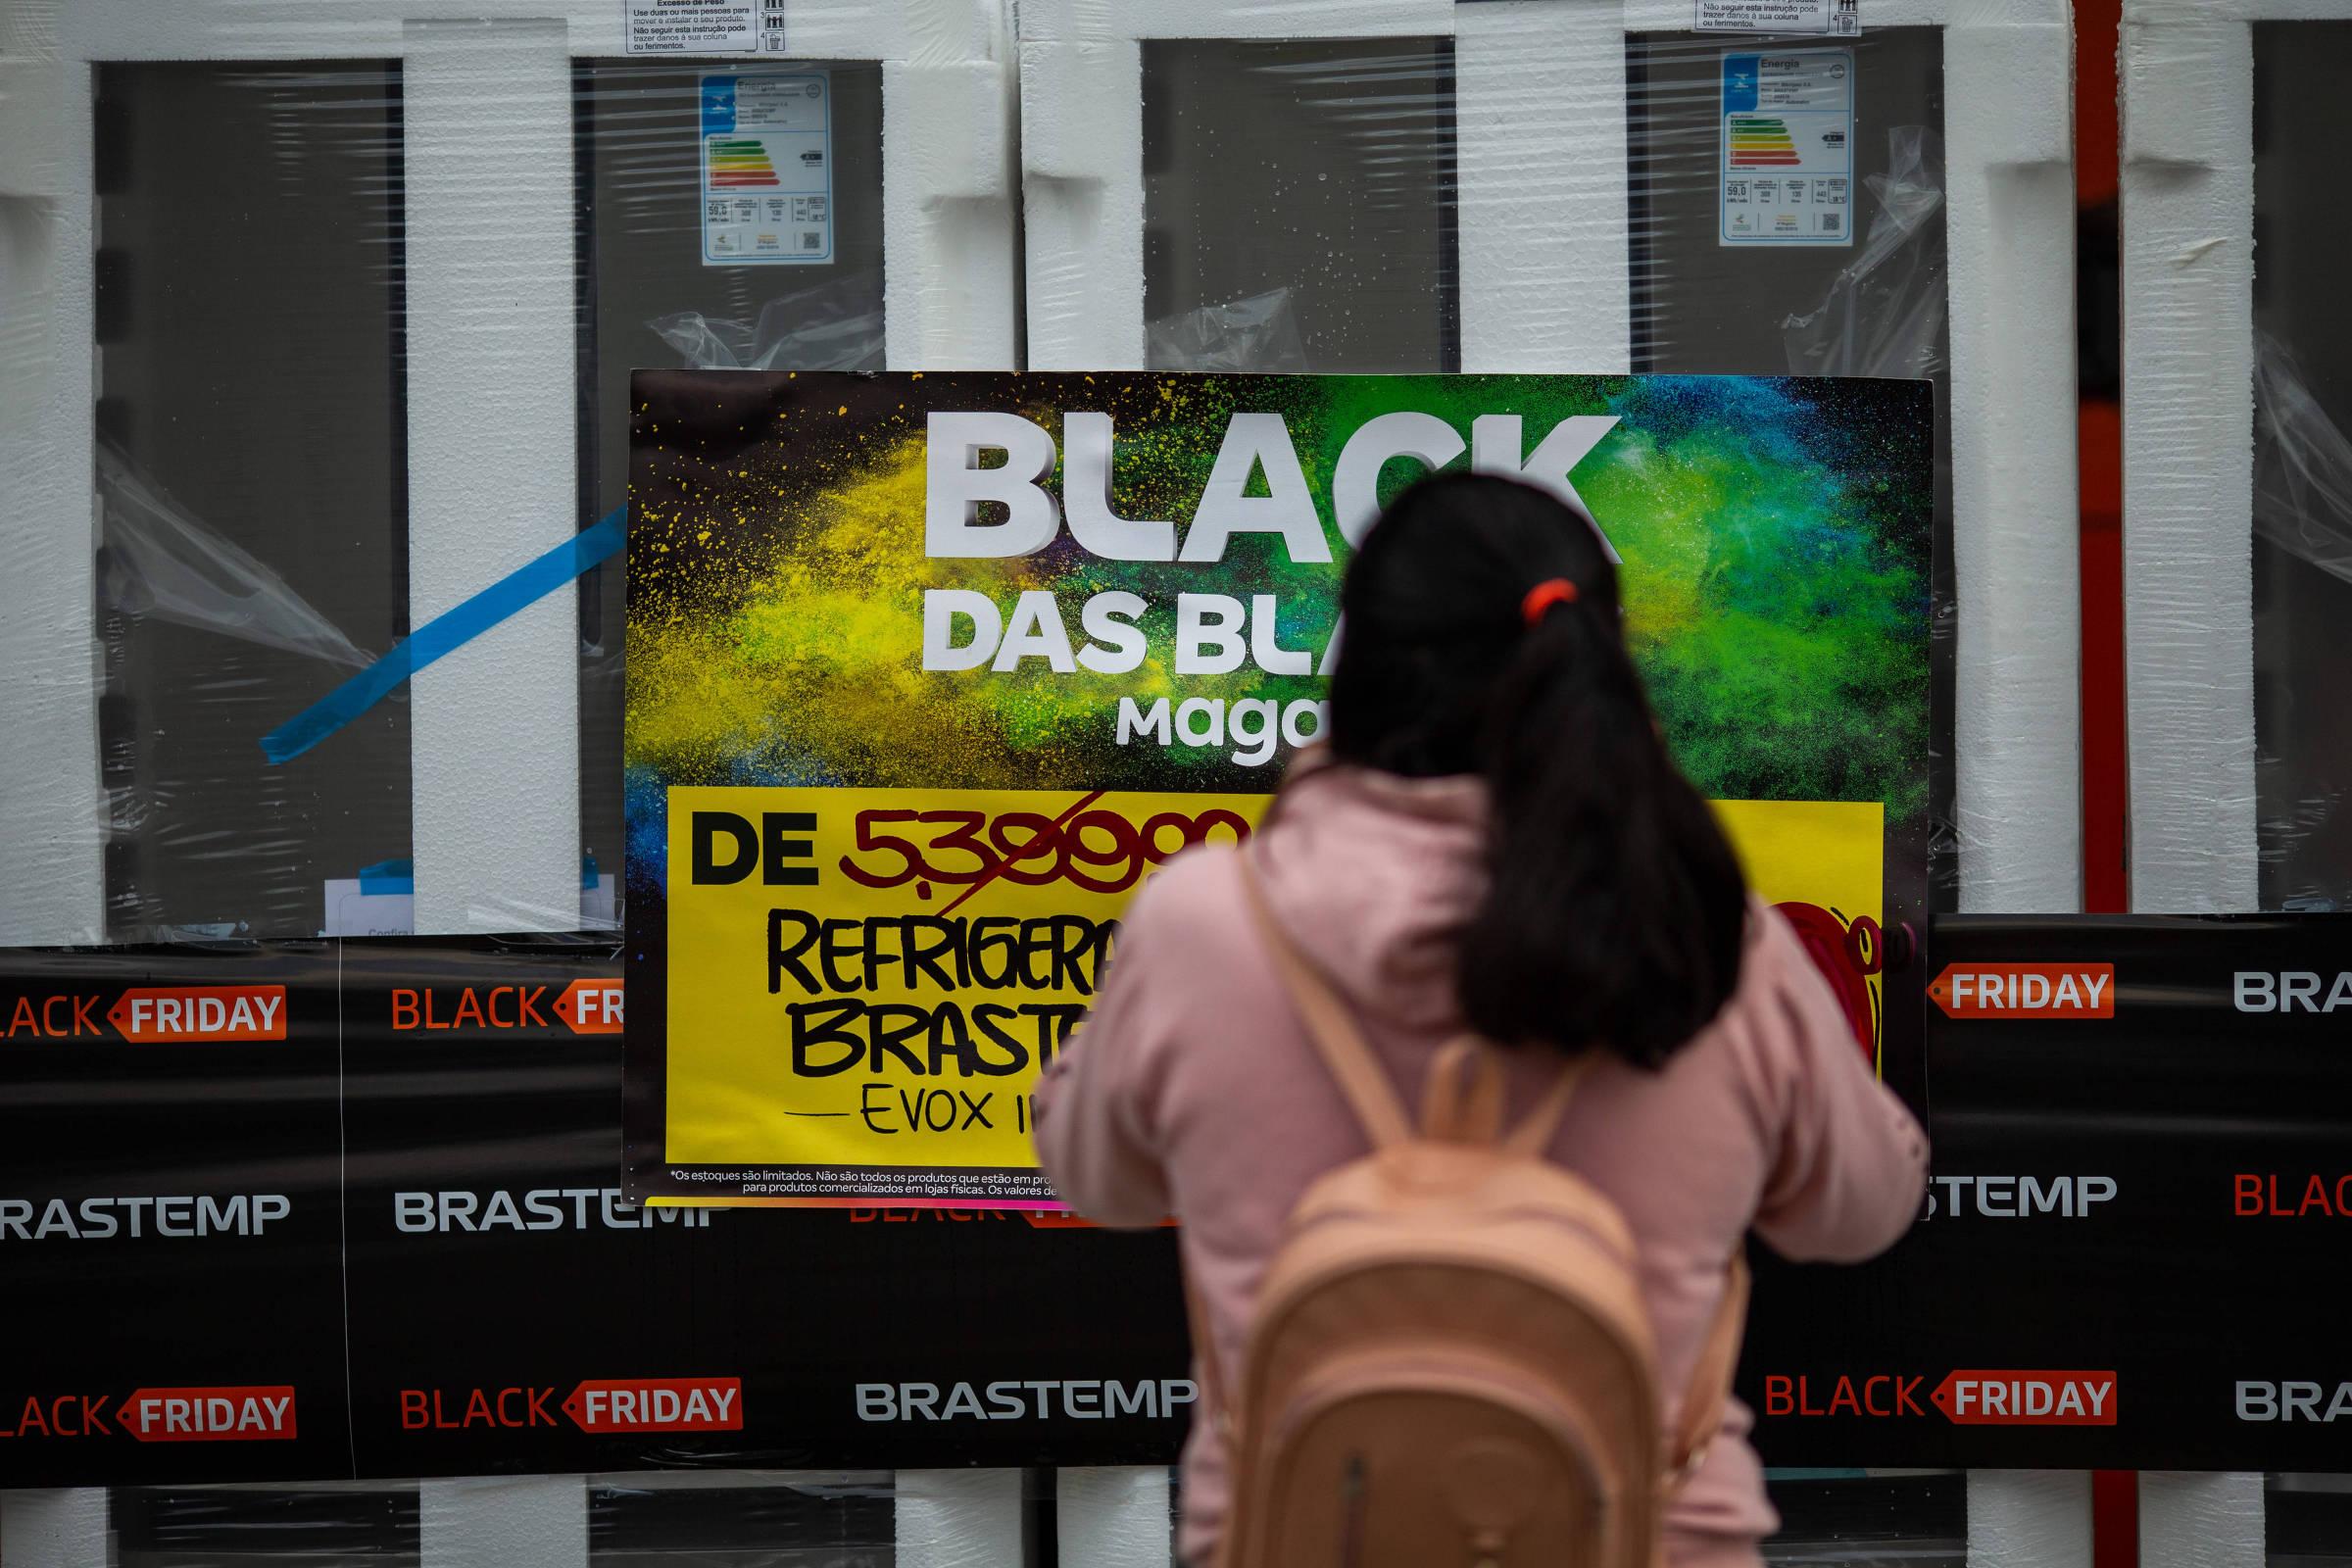 Black Friday: atraso e desconto falso lideram queixas - 25/11/2022 -  Mercado - Folha